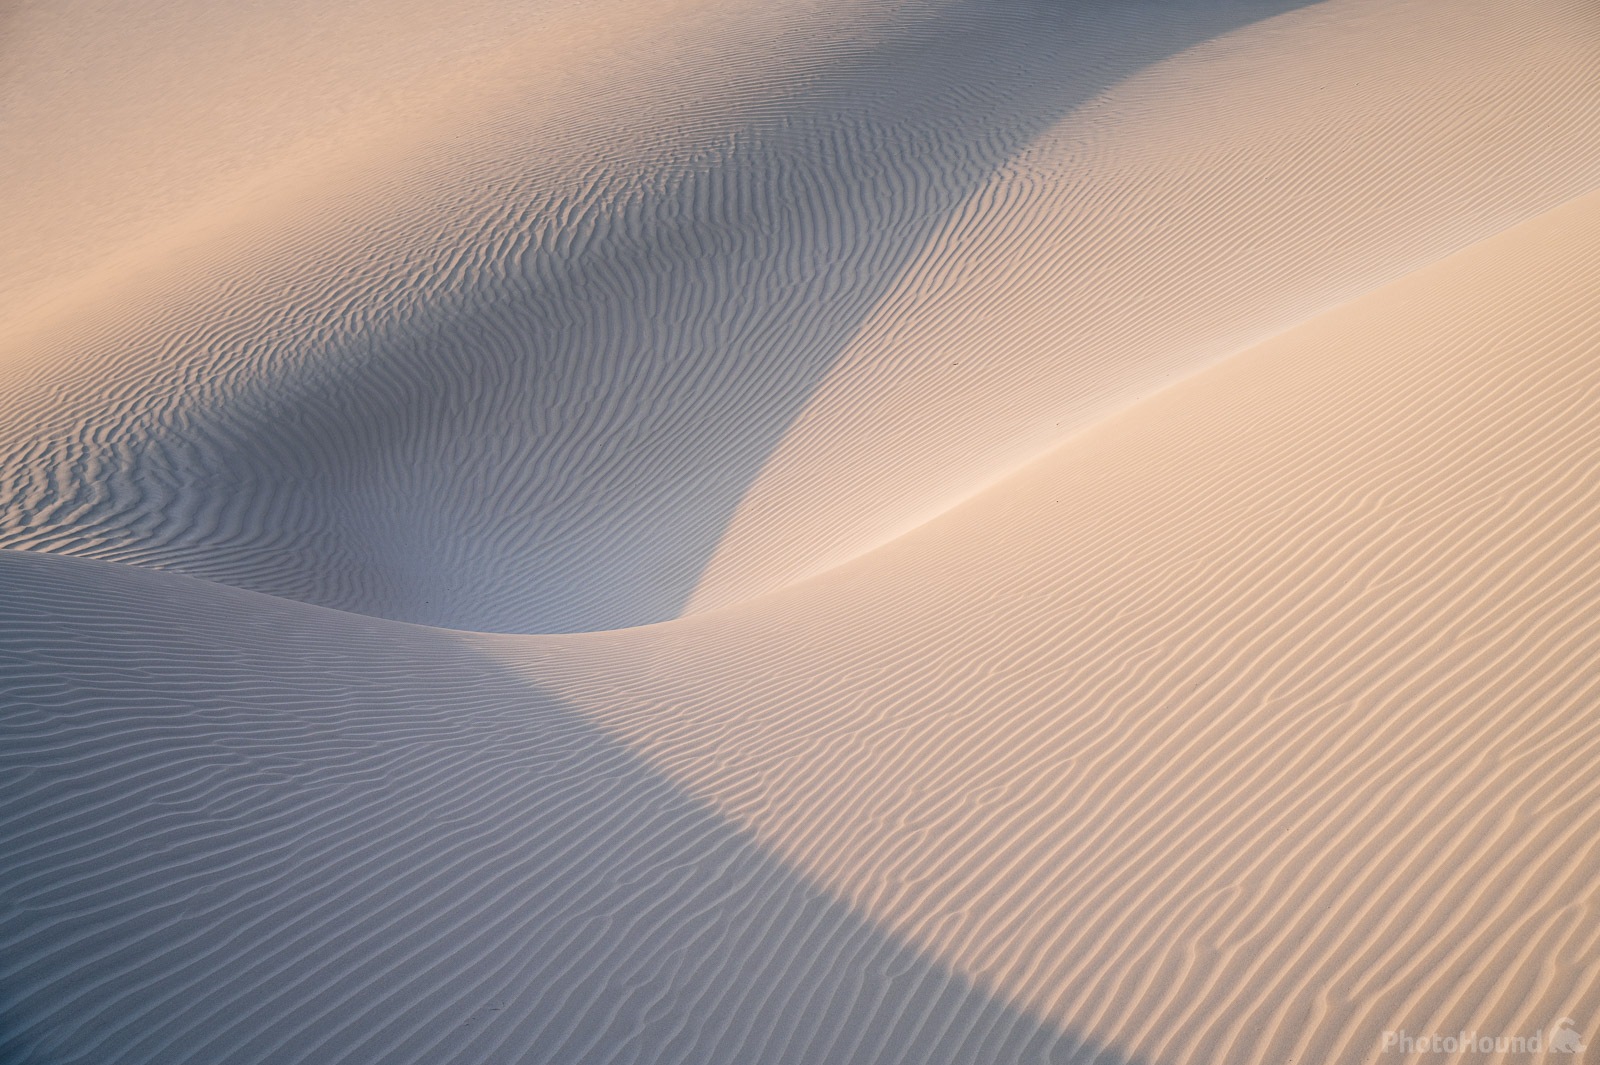 Image of Arher Sand Dunes, Socotra by Juraj Zimányi